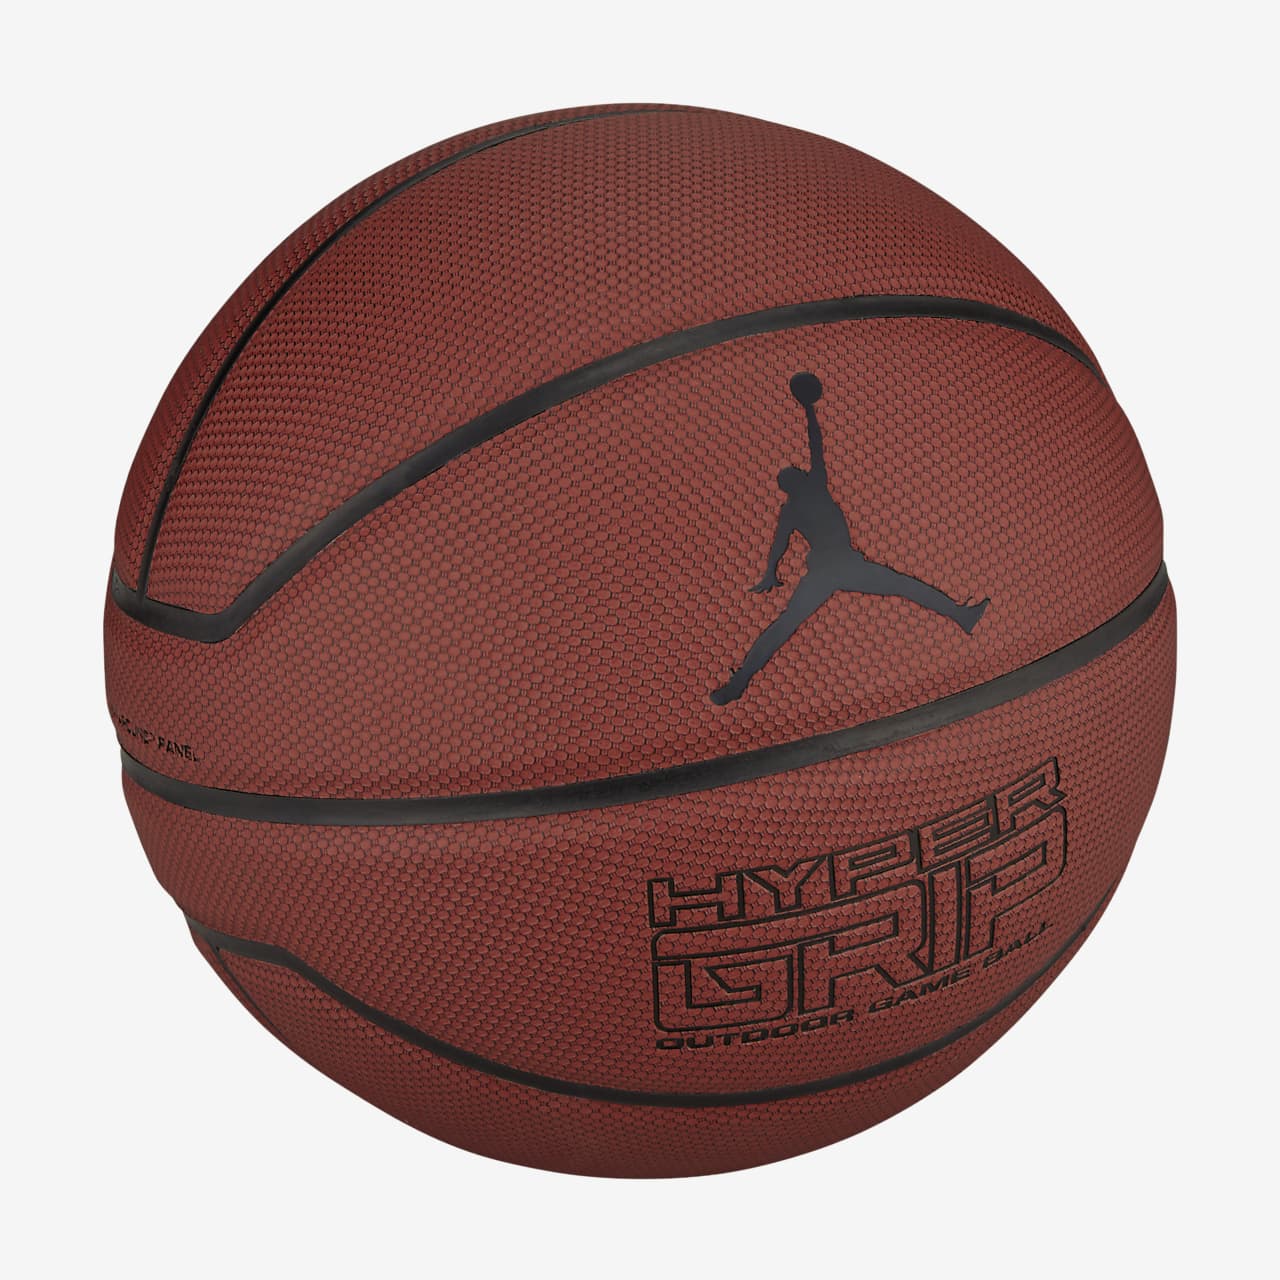 balon de baloncesto jordan hyper grip